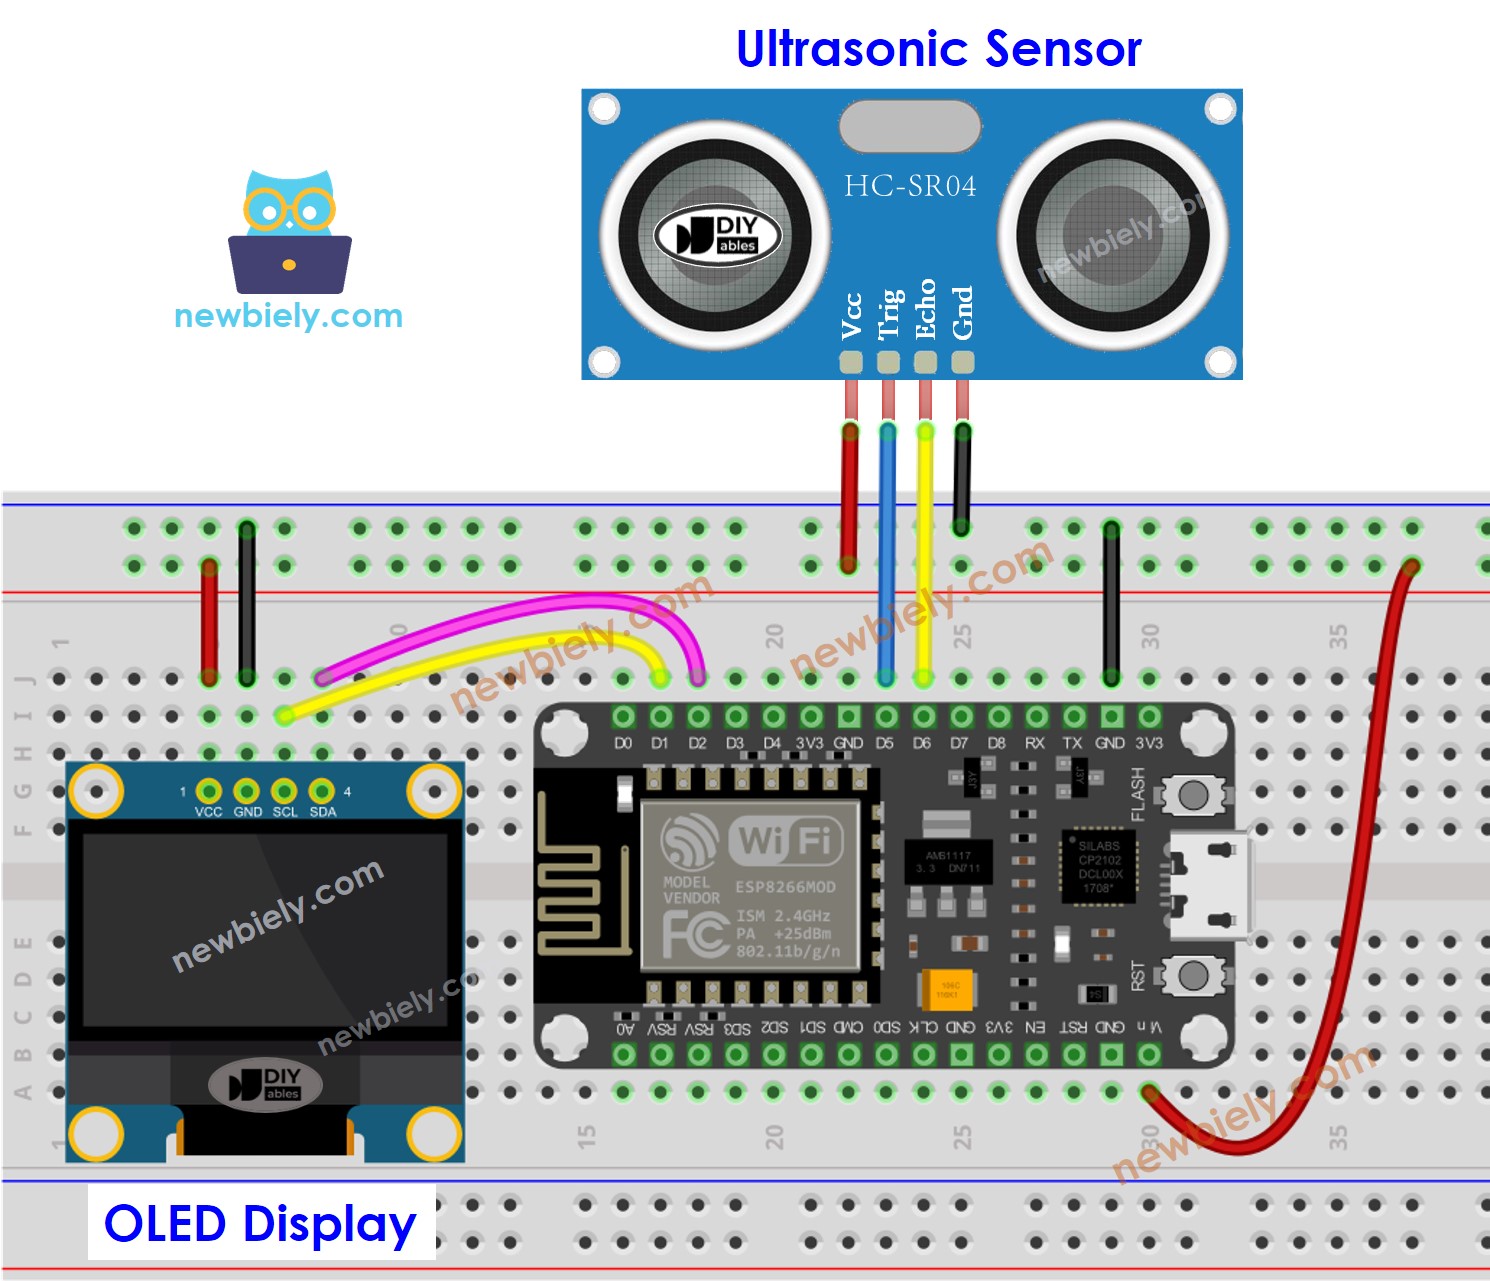 The wiring diagram between ESP8266 NodeMCU and Ultrasonic Sensor OLED